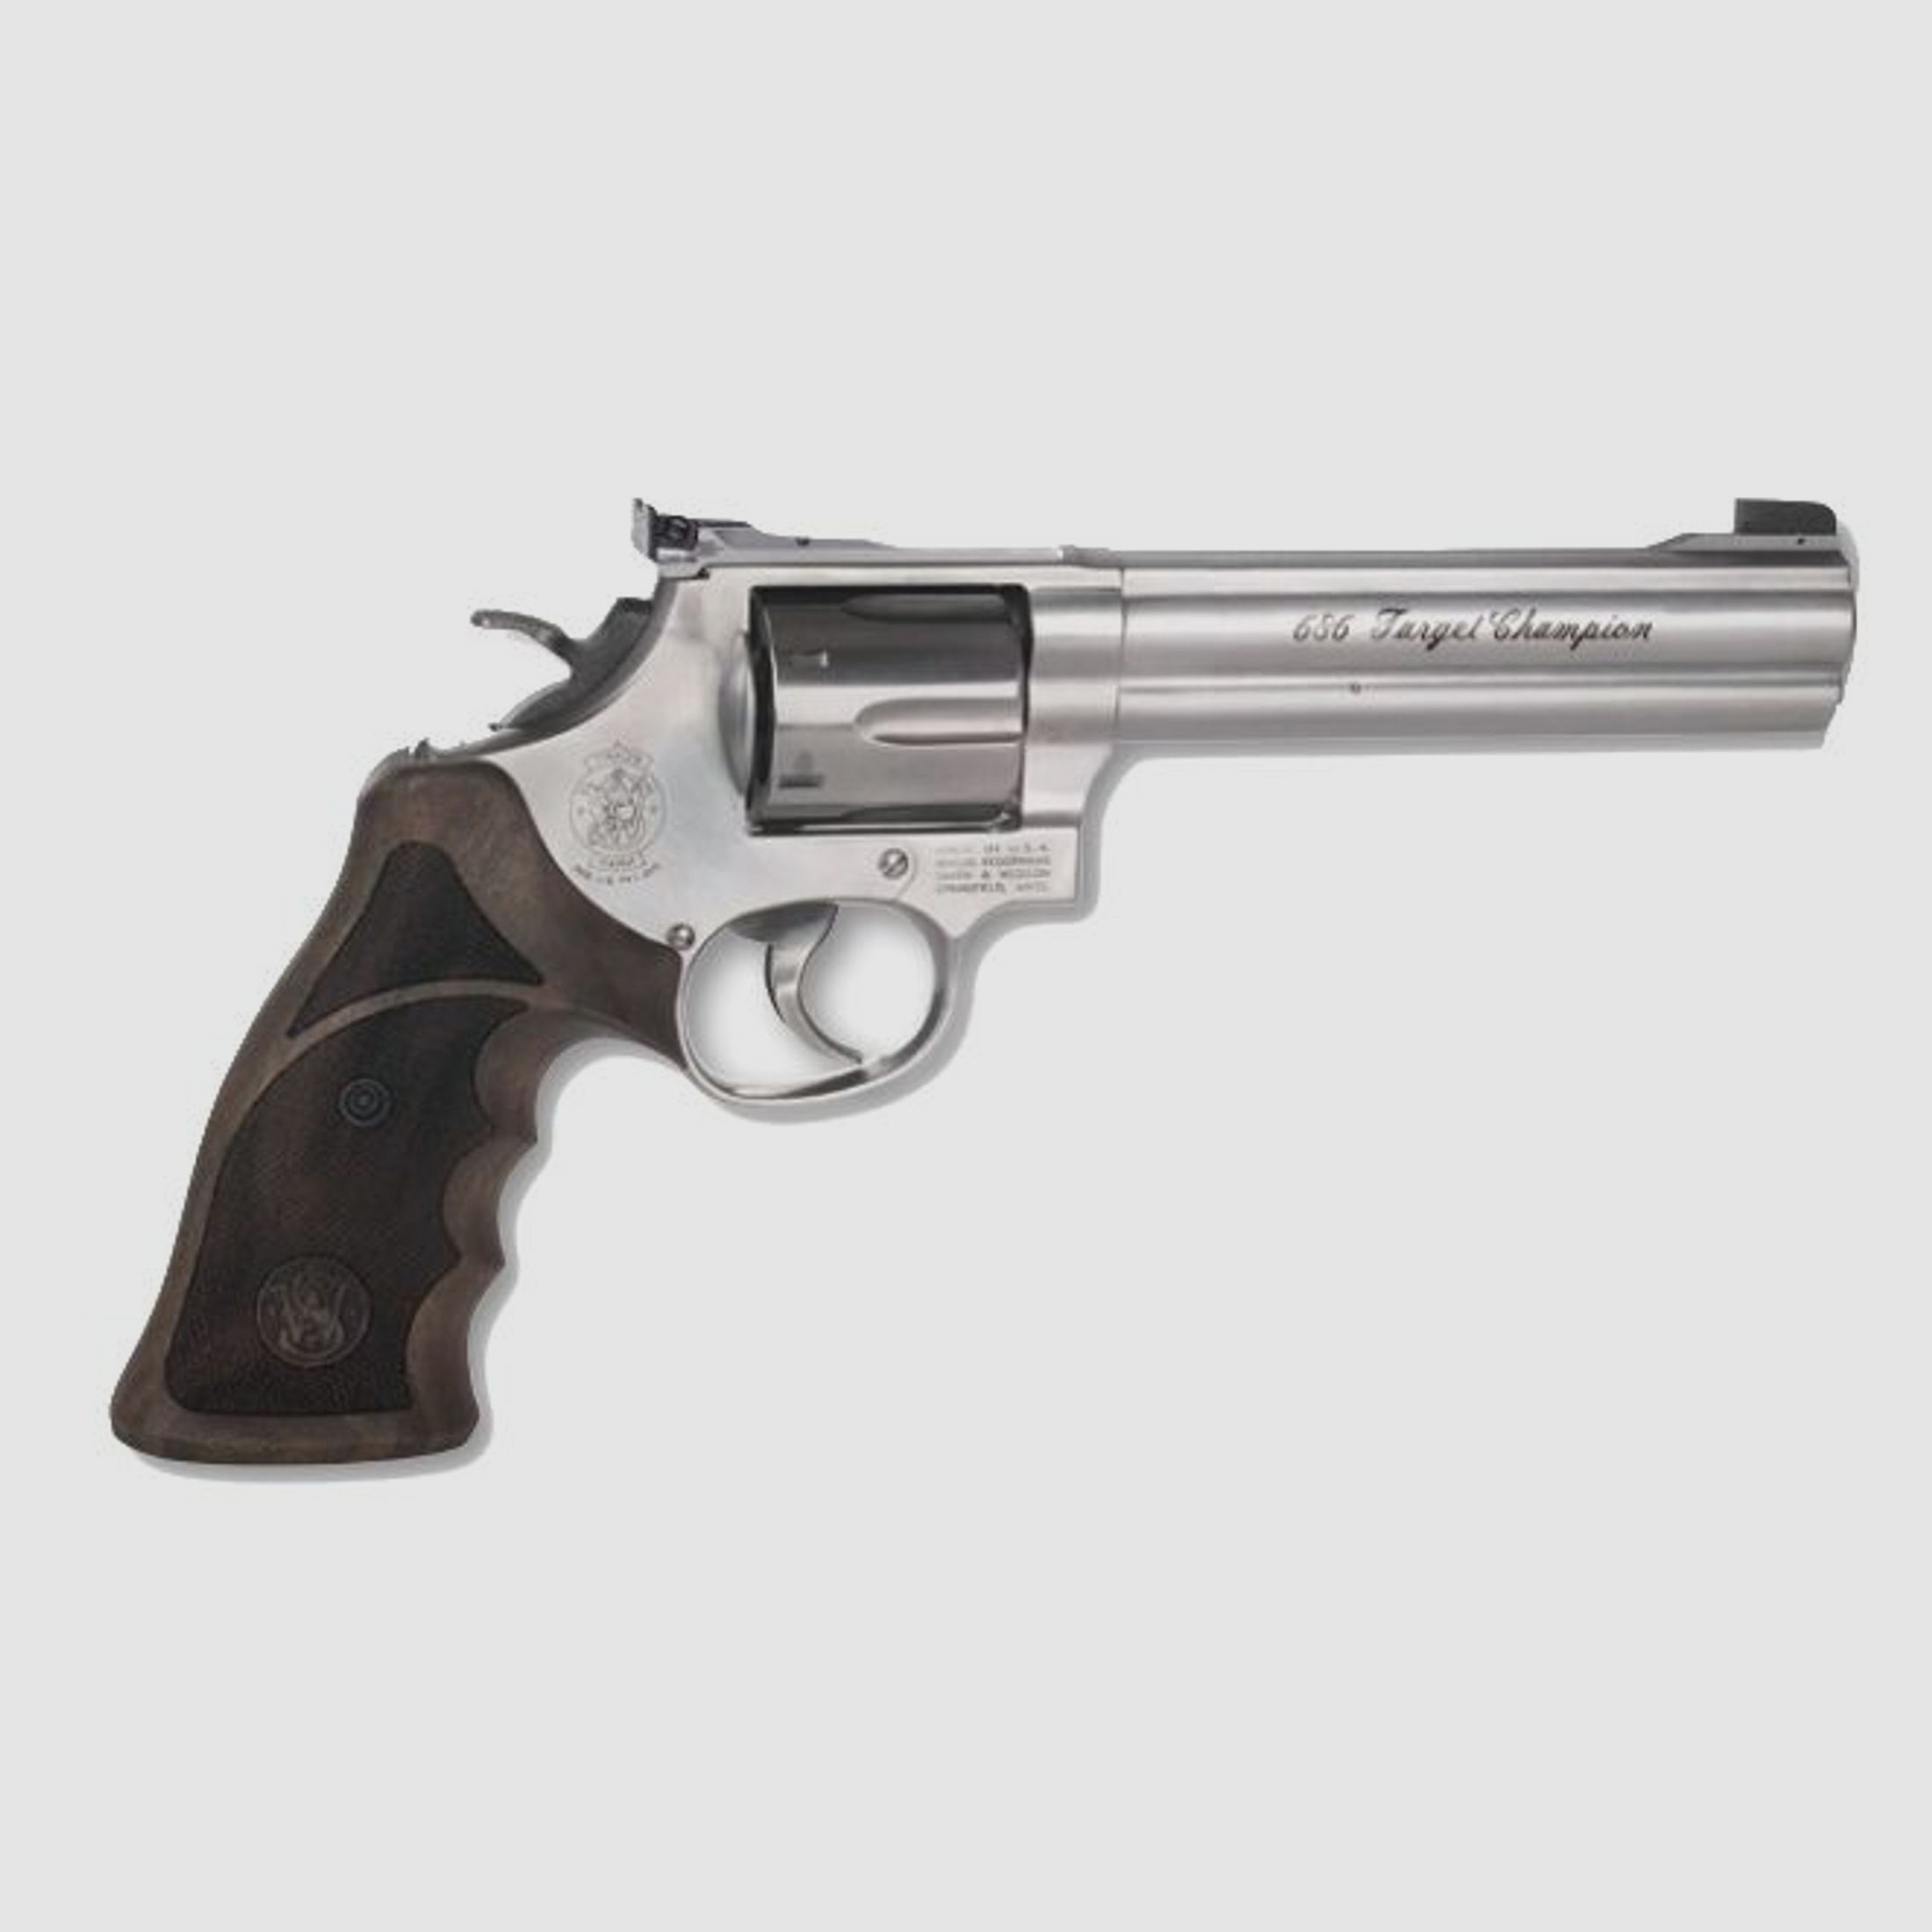 S&W Mod. 686 Target Champion, .357 Magnum Revolver	 Smith & Wesson 686